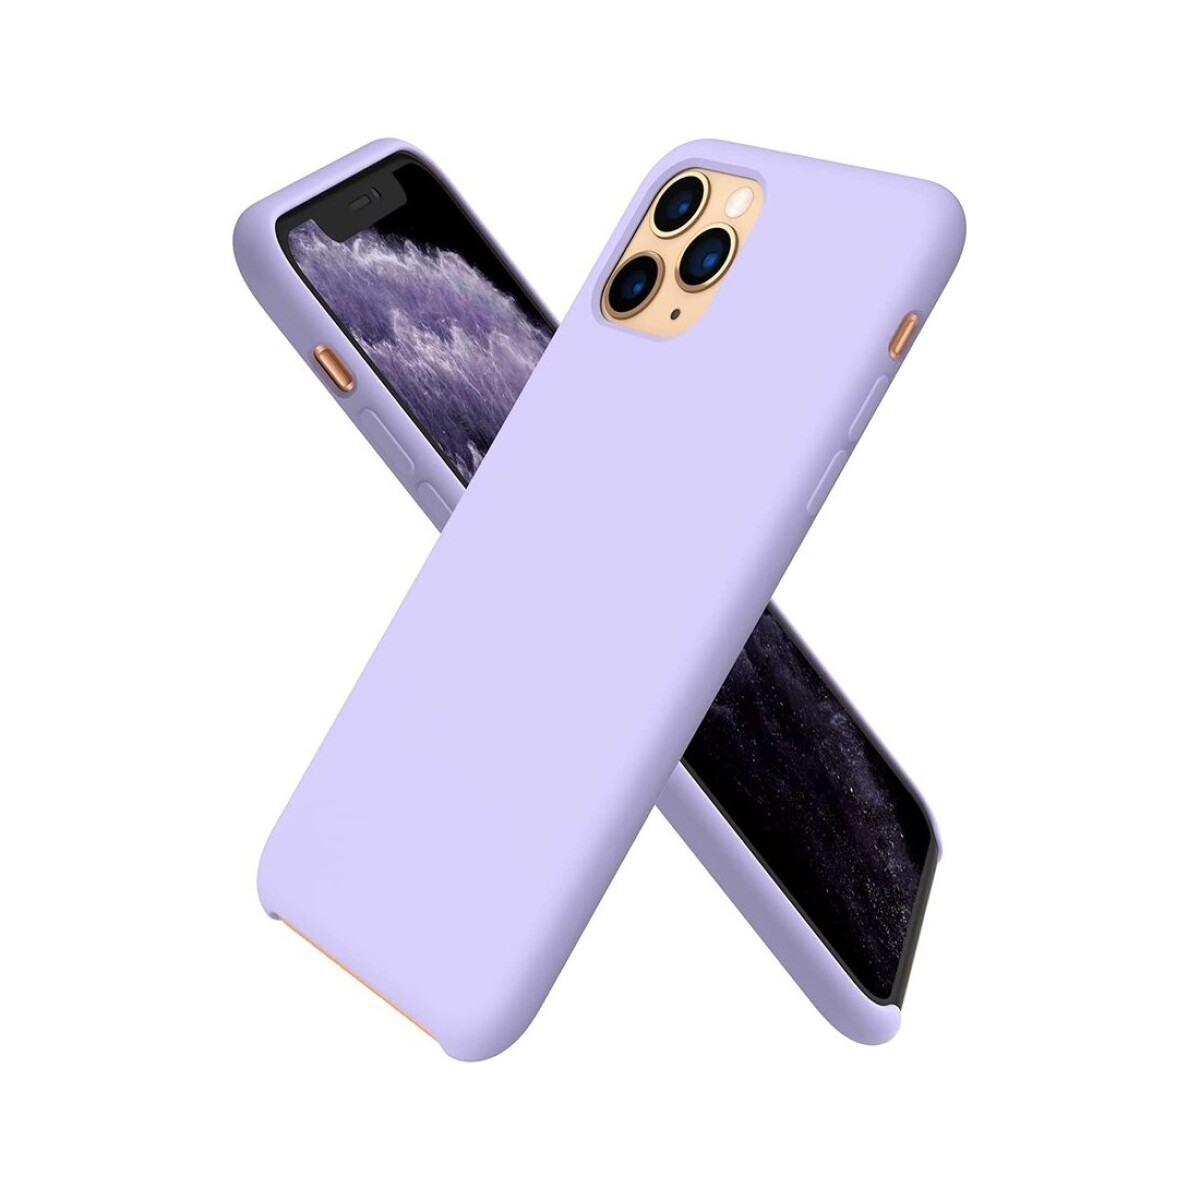 Protector case de silicona para iphone 11 pro max - Lila pastel 